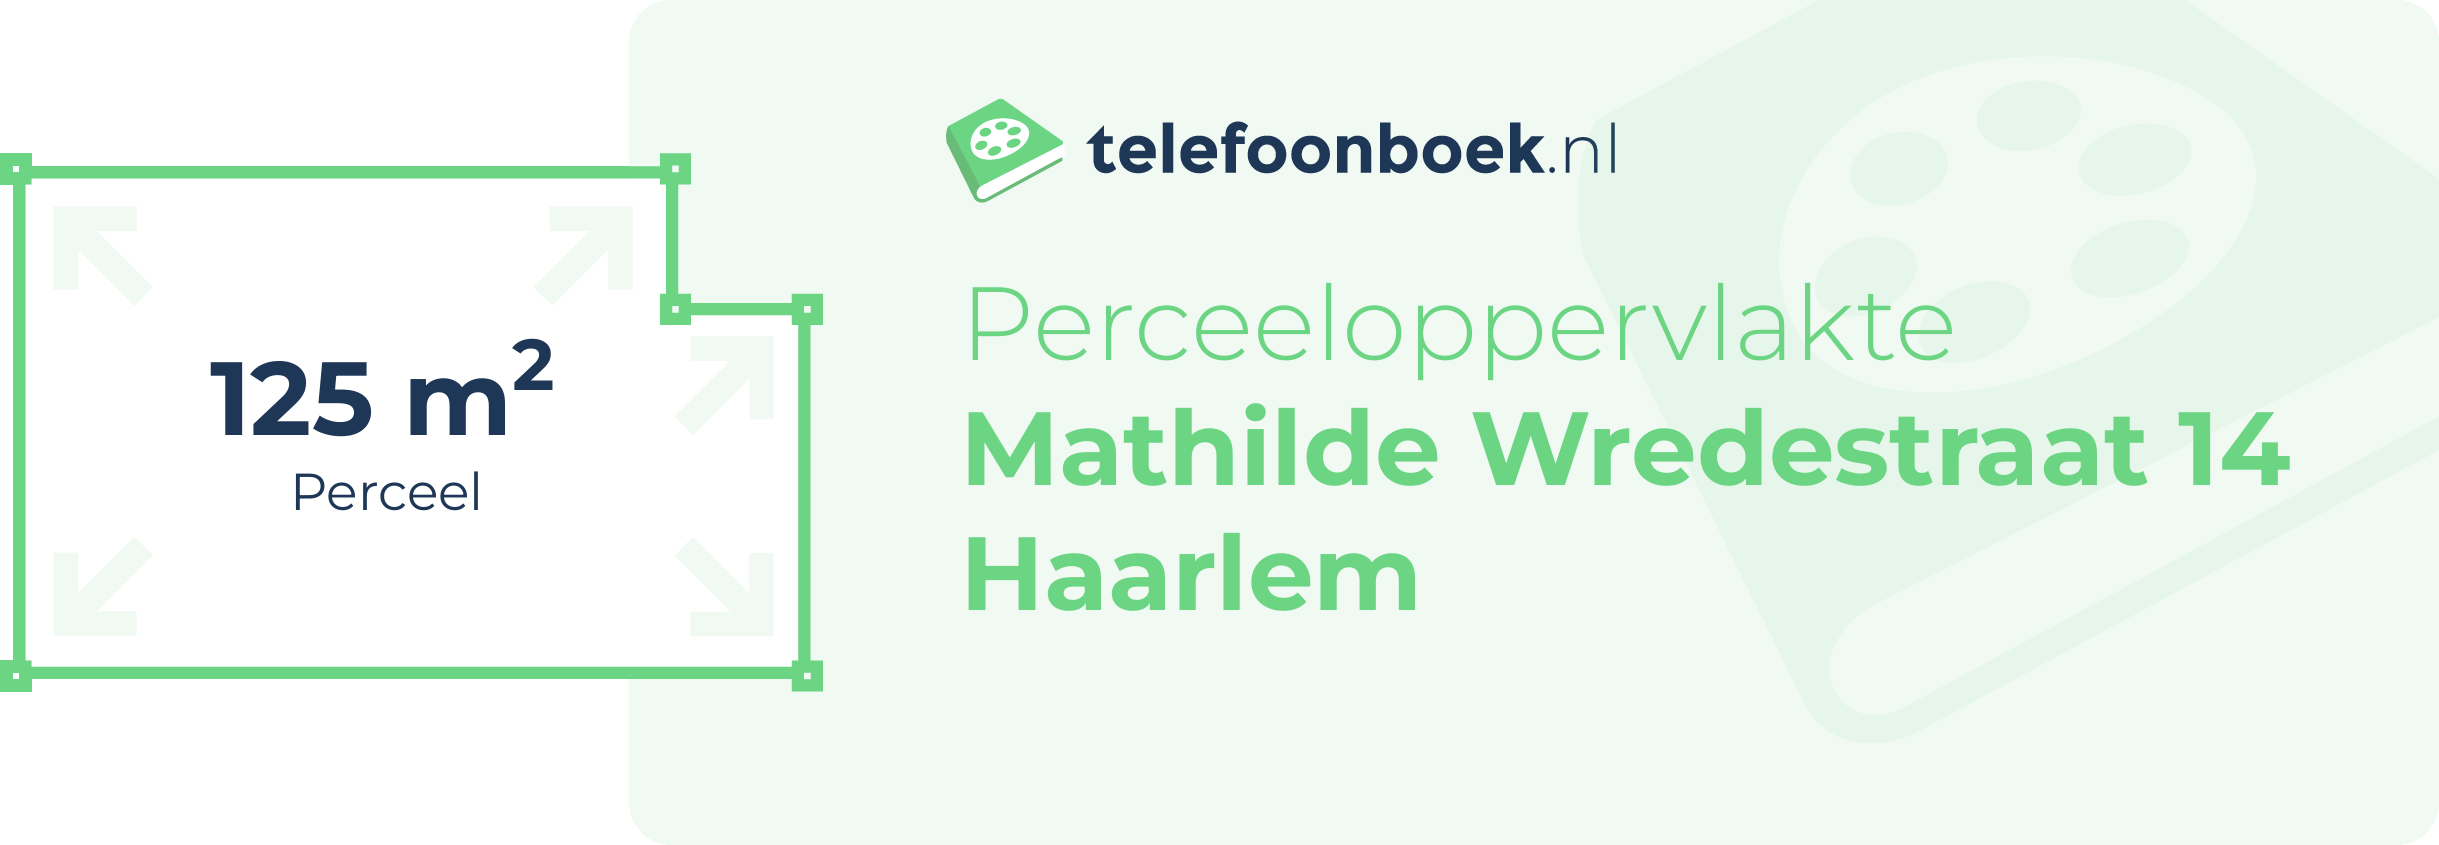 Perceeloppervlakte Mathilde Wredestraat 14 Haarlem